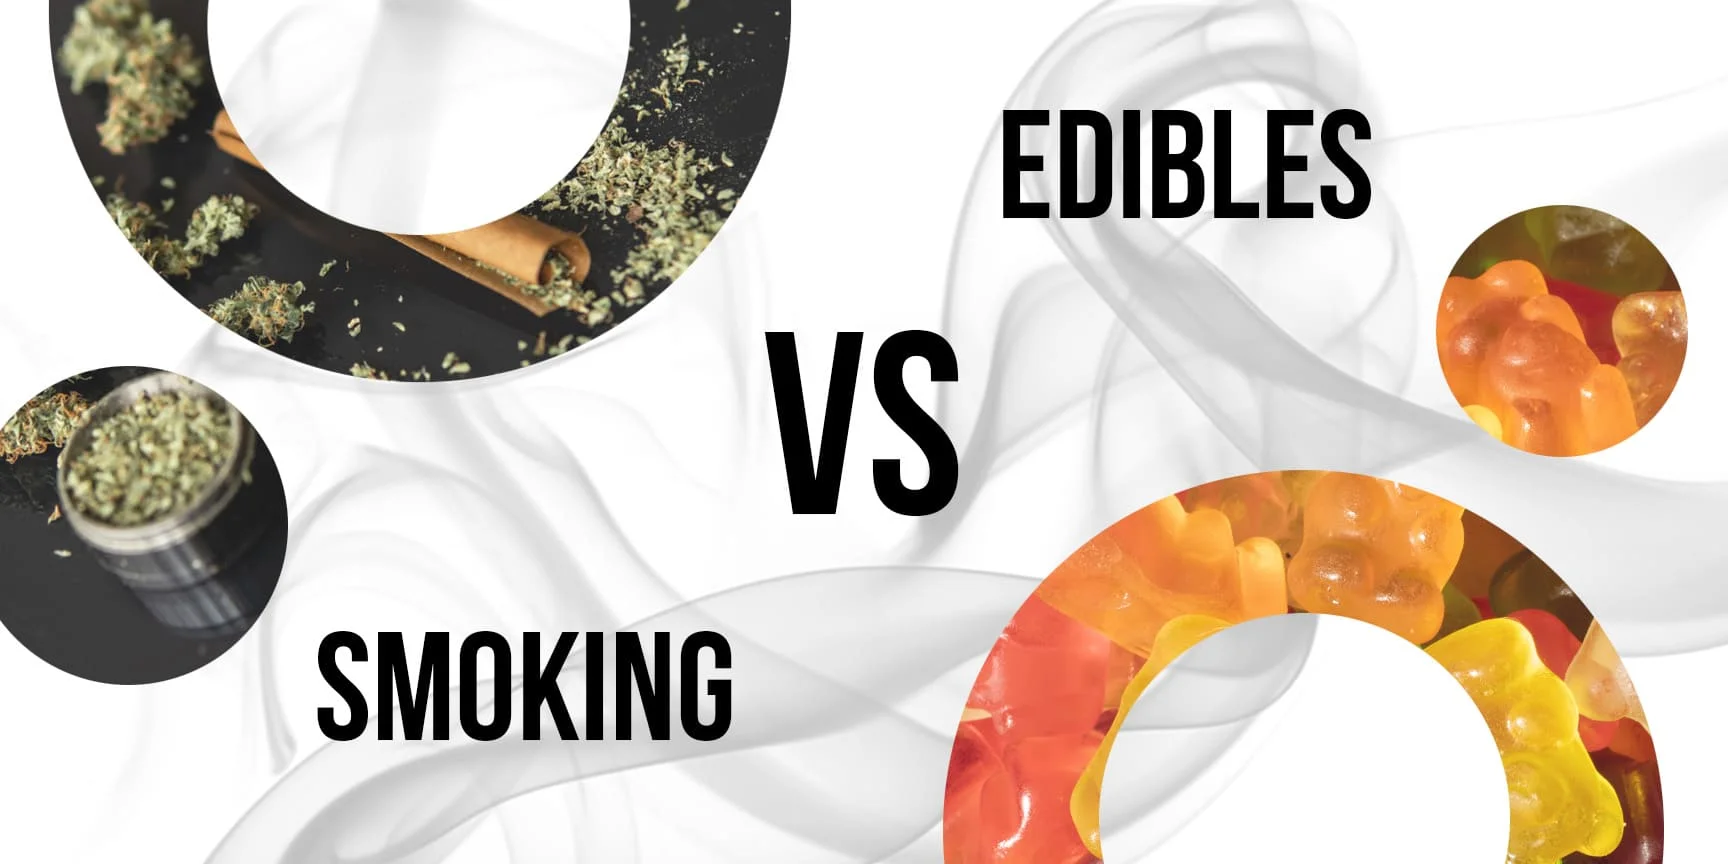 lettering "smoking vs edibles"